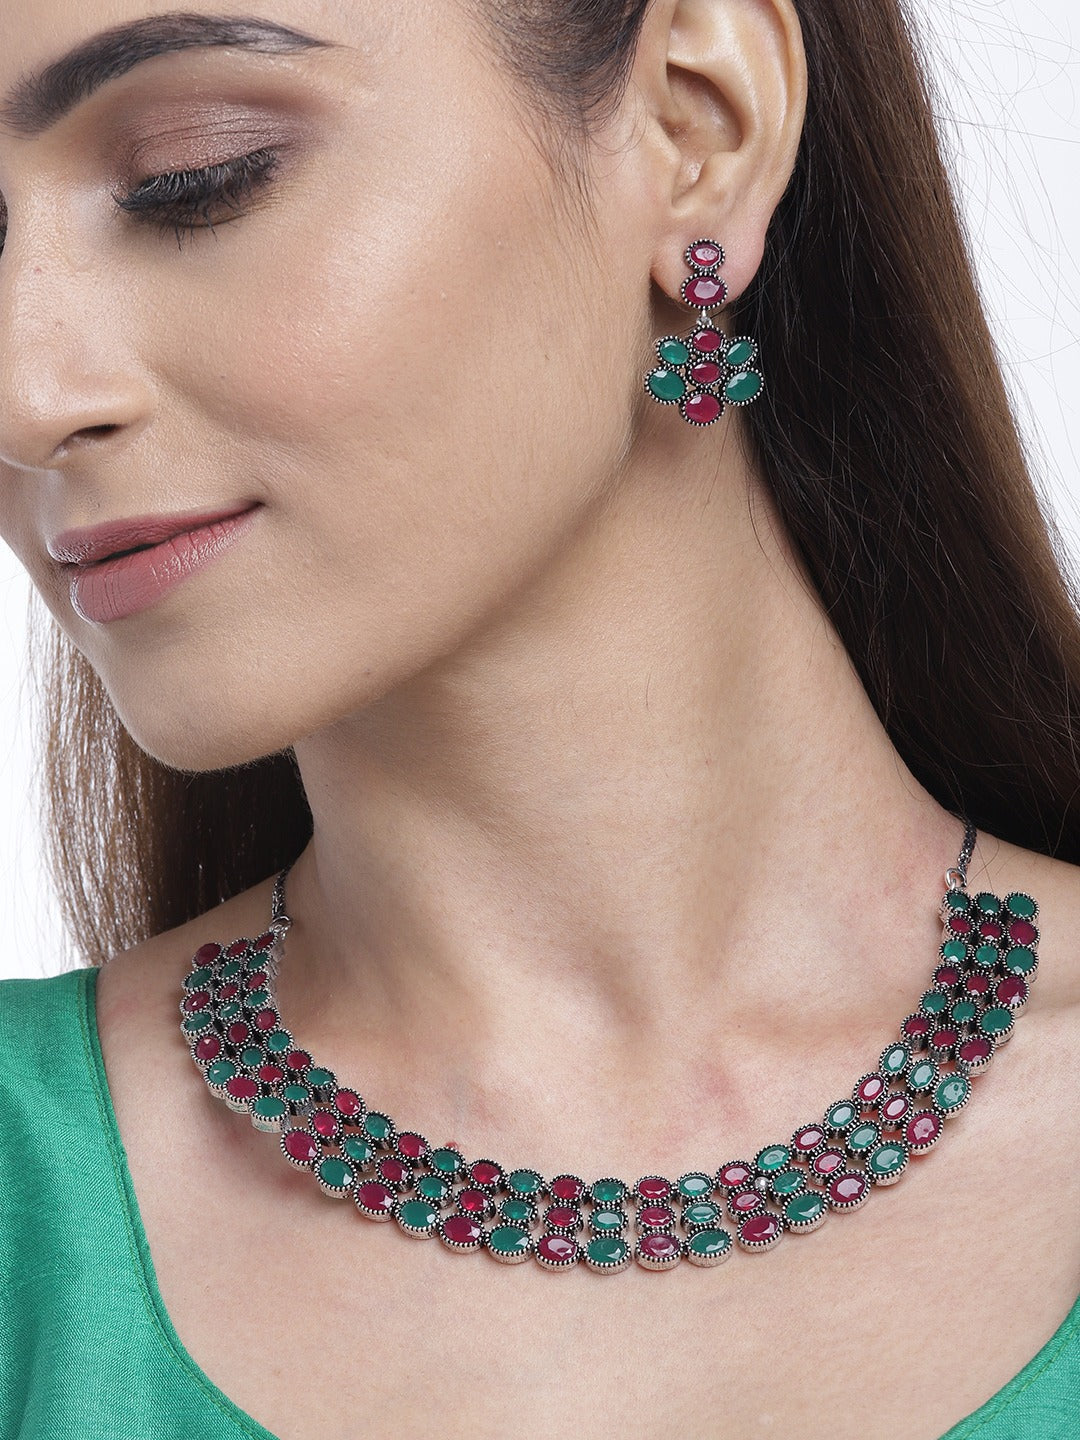 Ruby Emerald German Silver Jewellery Set